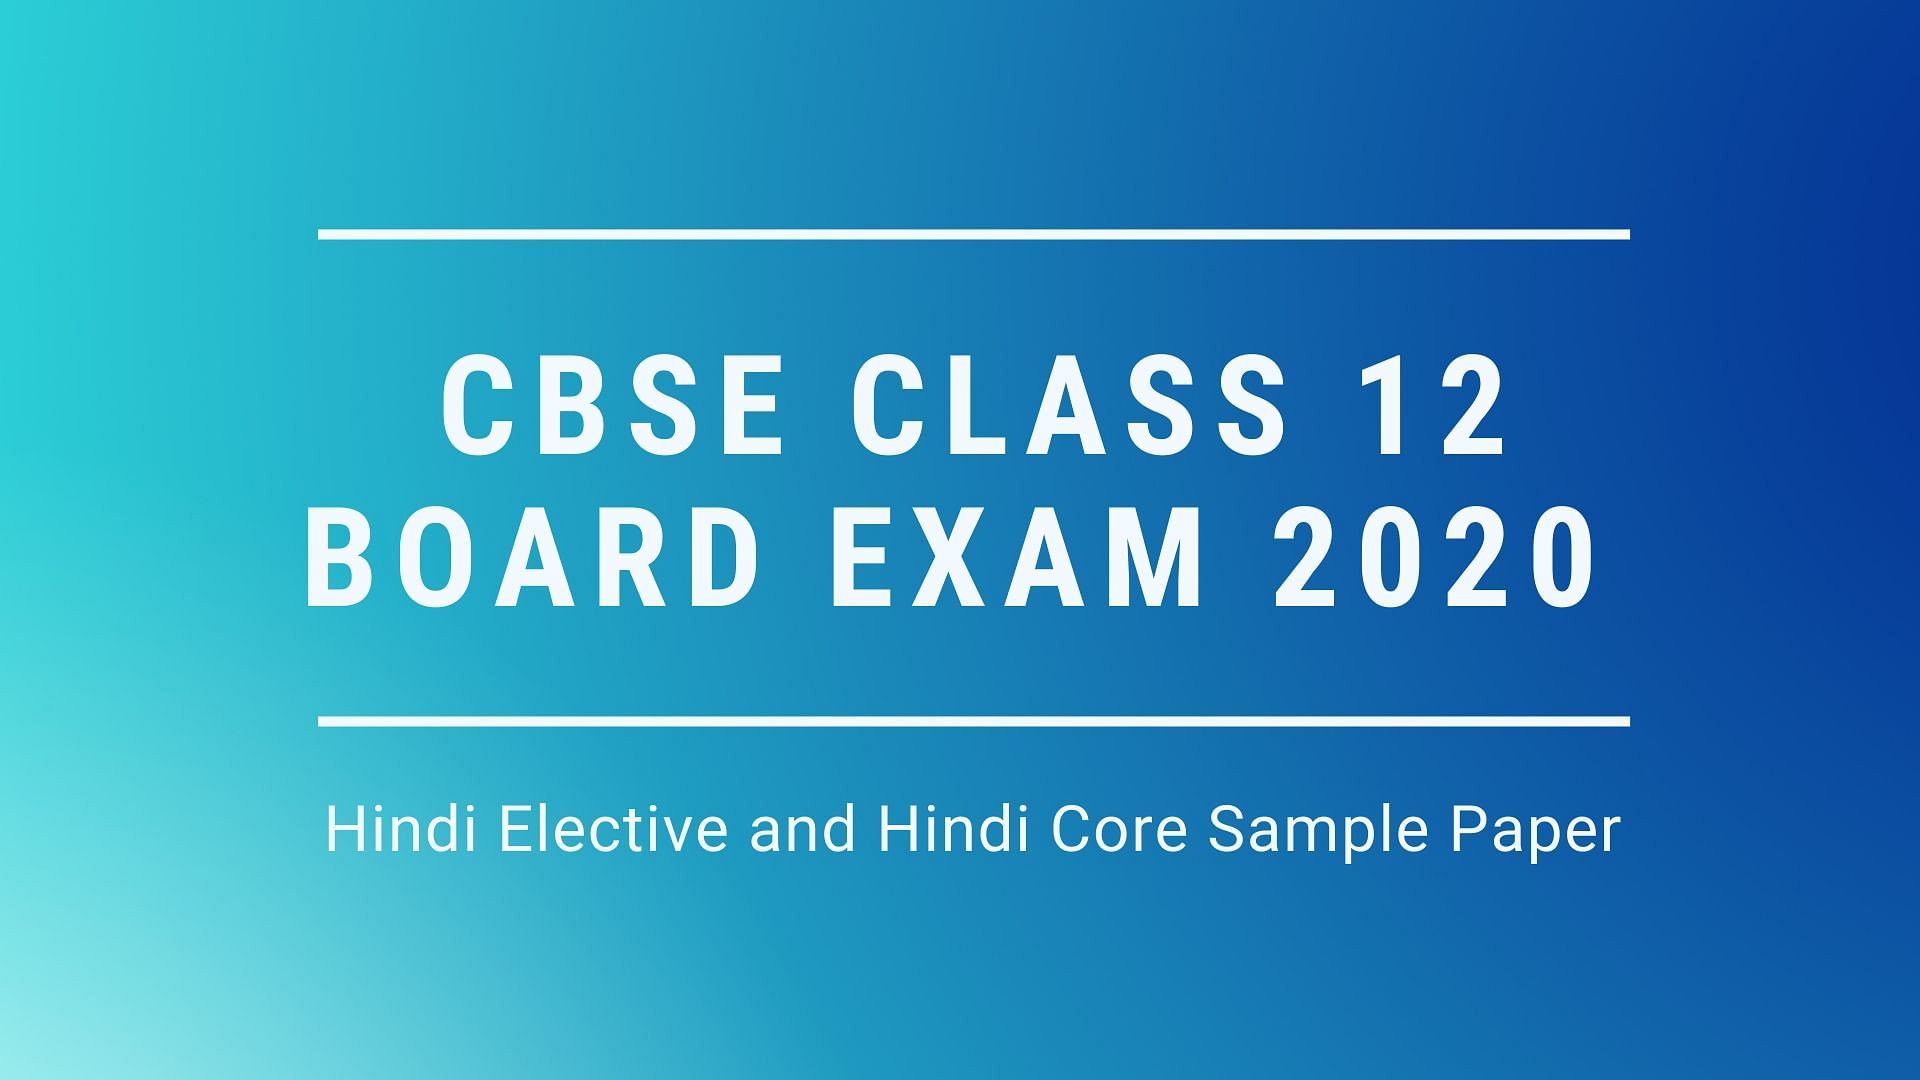 CBSE Class 12 Hindi Elective and Hindi Core Sample Paper and Exam Pattern